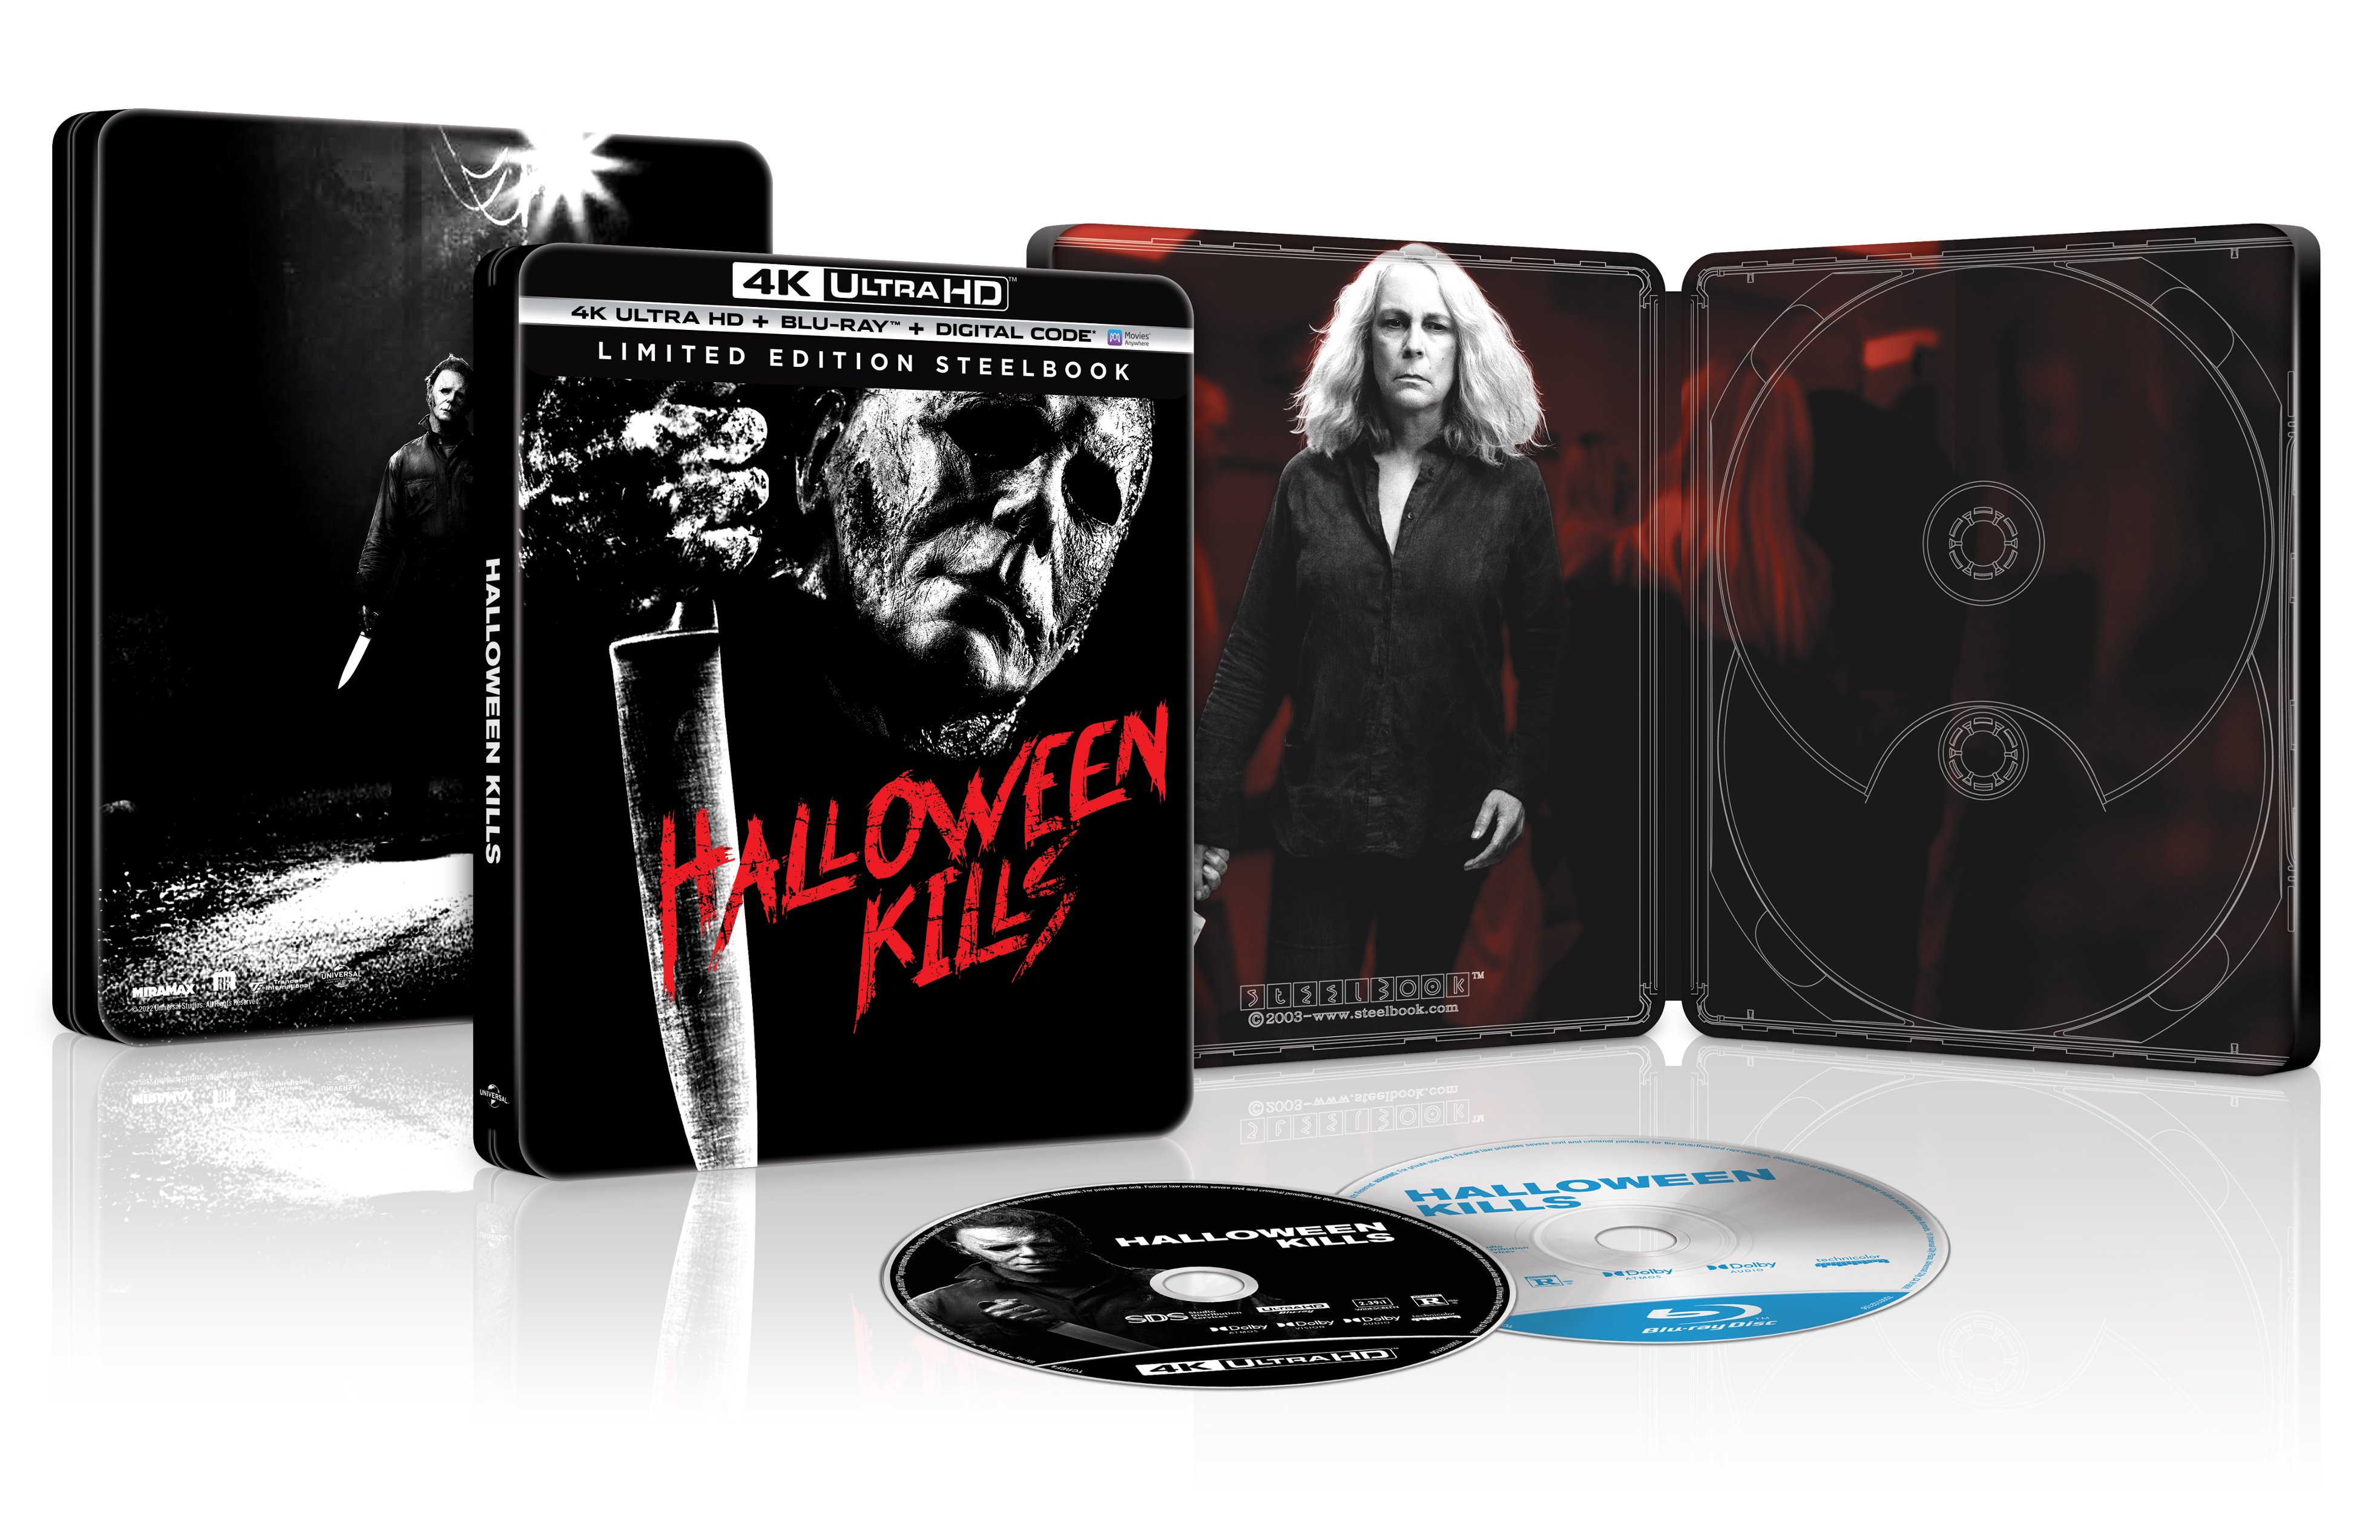 Halloween / Halloween Kills / Halloween Ends Limited Steelbook edition